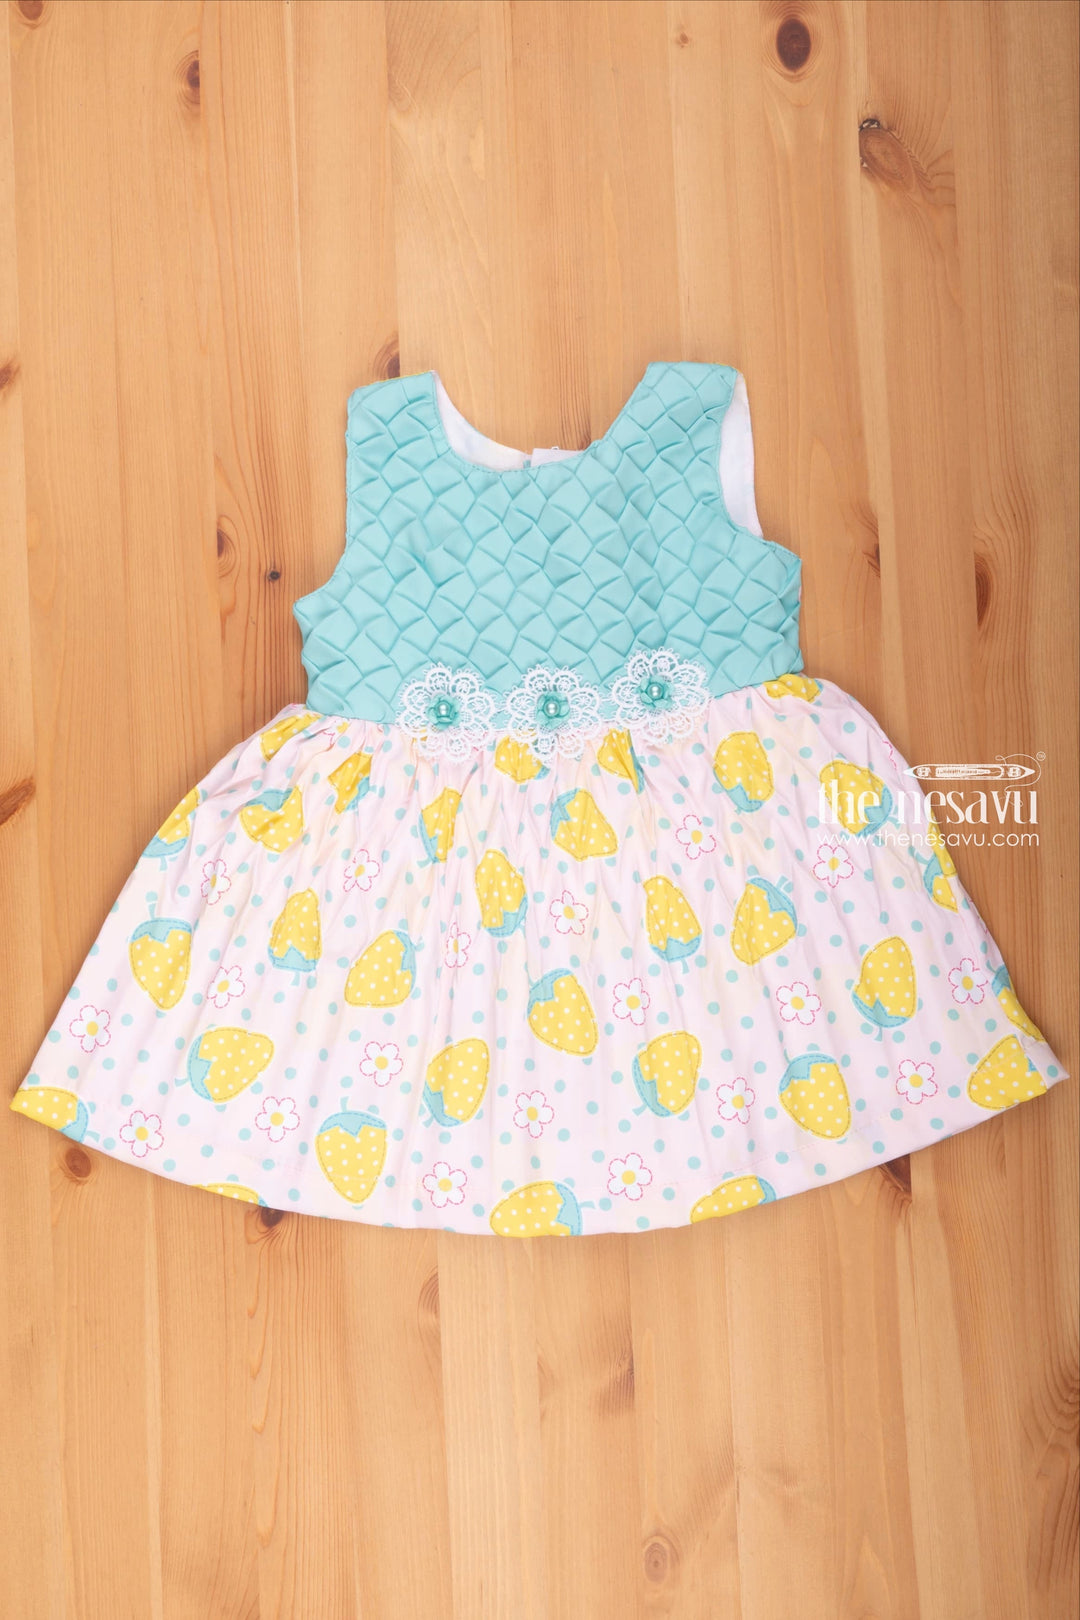 The Nesavu Baby Fancy Frock Stylish Salmon Cotton Dress: Strawberry Prints for Young Charms Nesavu 14 (6M) / Salmon / Poly Crepe BFJ465A-14 Baby Girl Dresses | Cotton Outfit for Newborn | the Nesavu